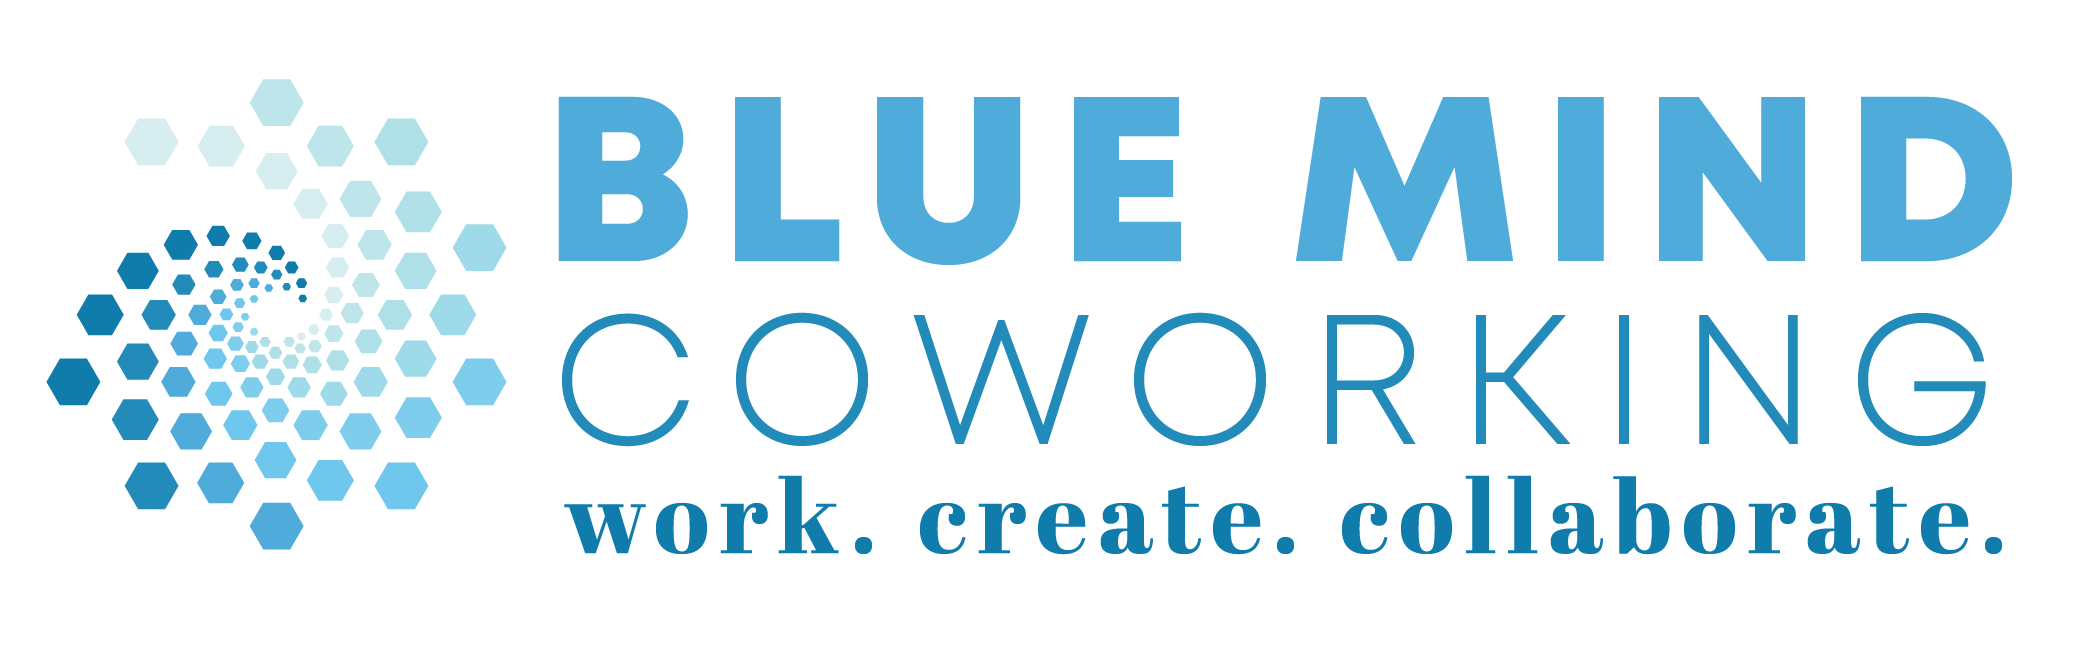 Blue Mind Coworking Wilmington, NC